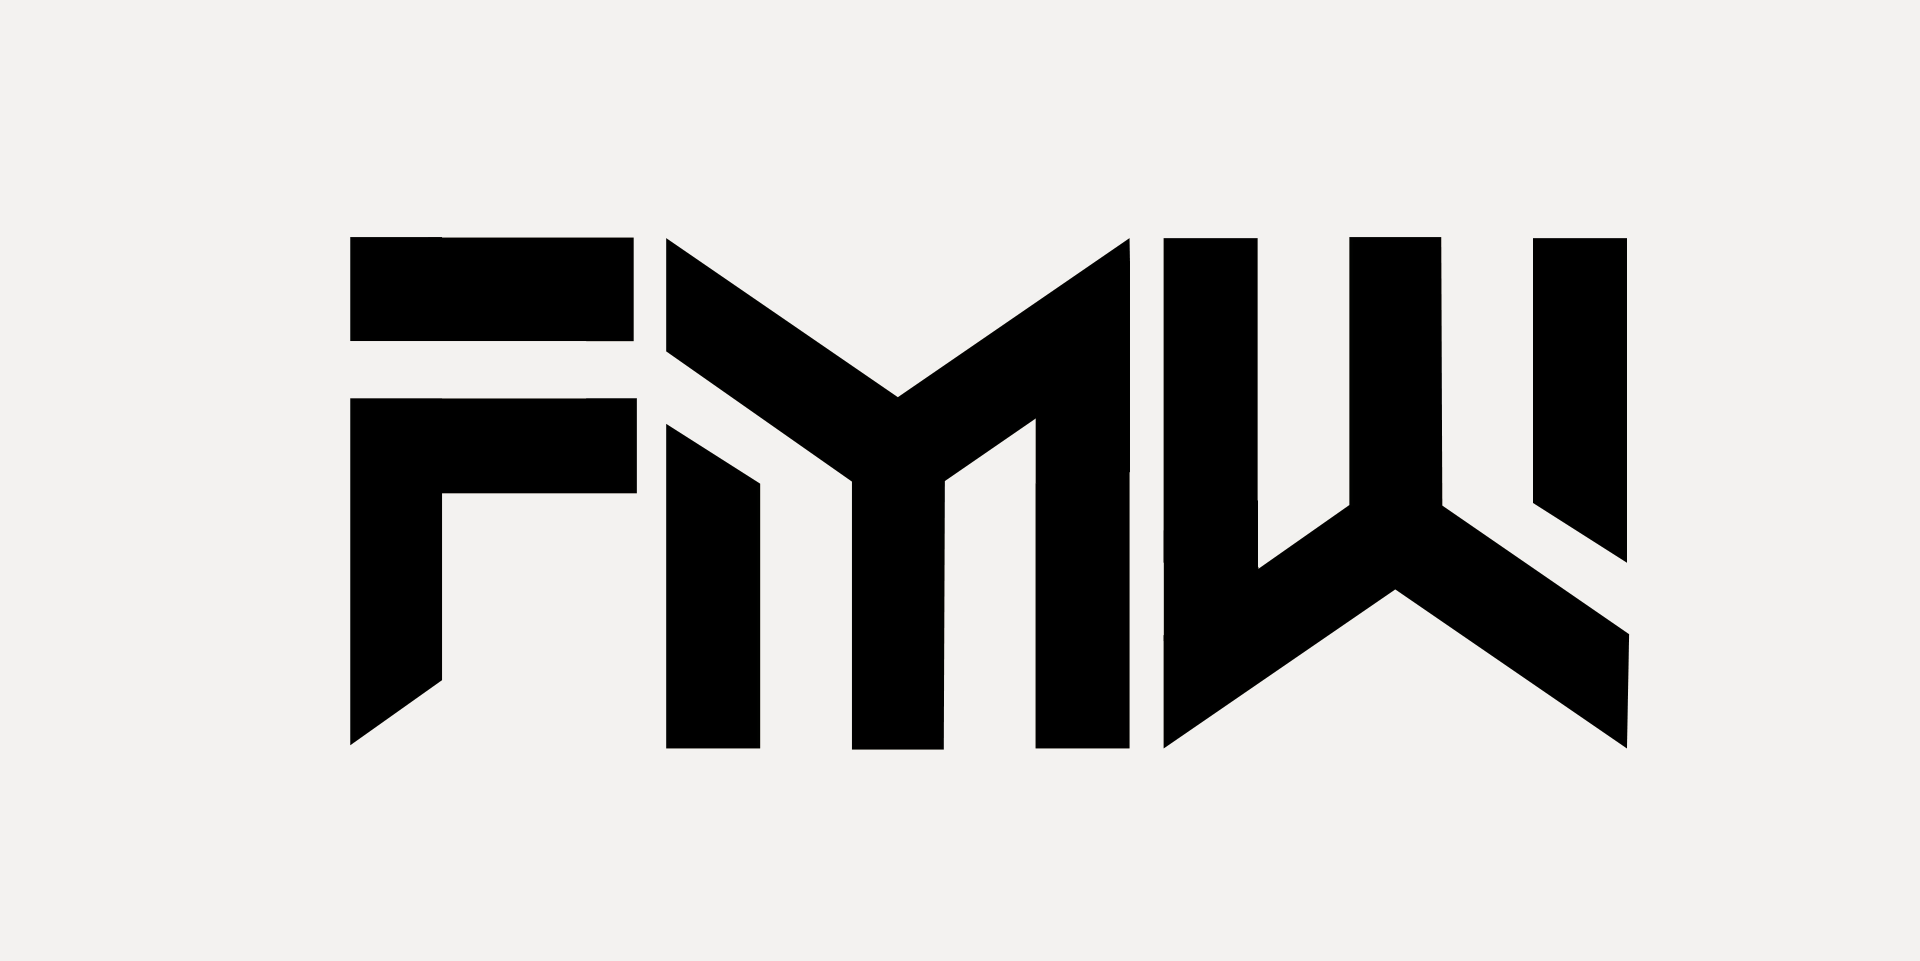 FMW Media Works Corp, Saturday, March 6, 2021, Press release picture